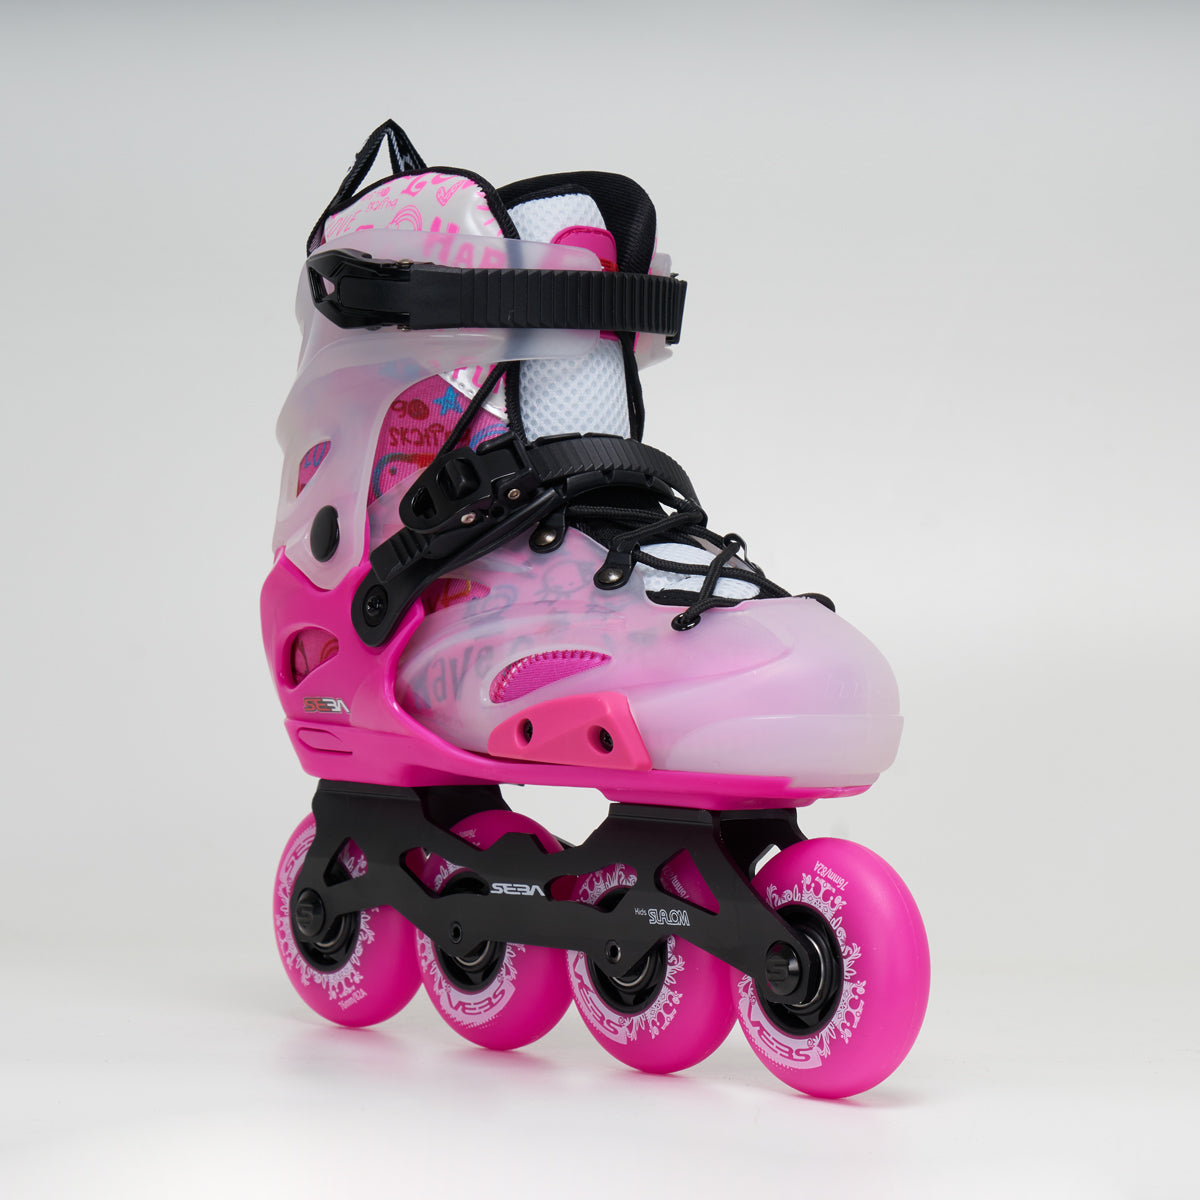 Seba ST MX Junior Adjustable Inline Skates - Pink